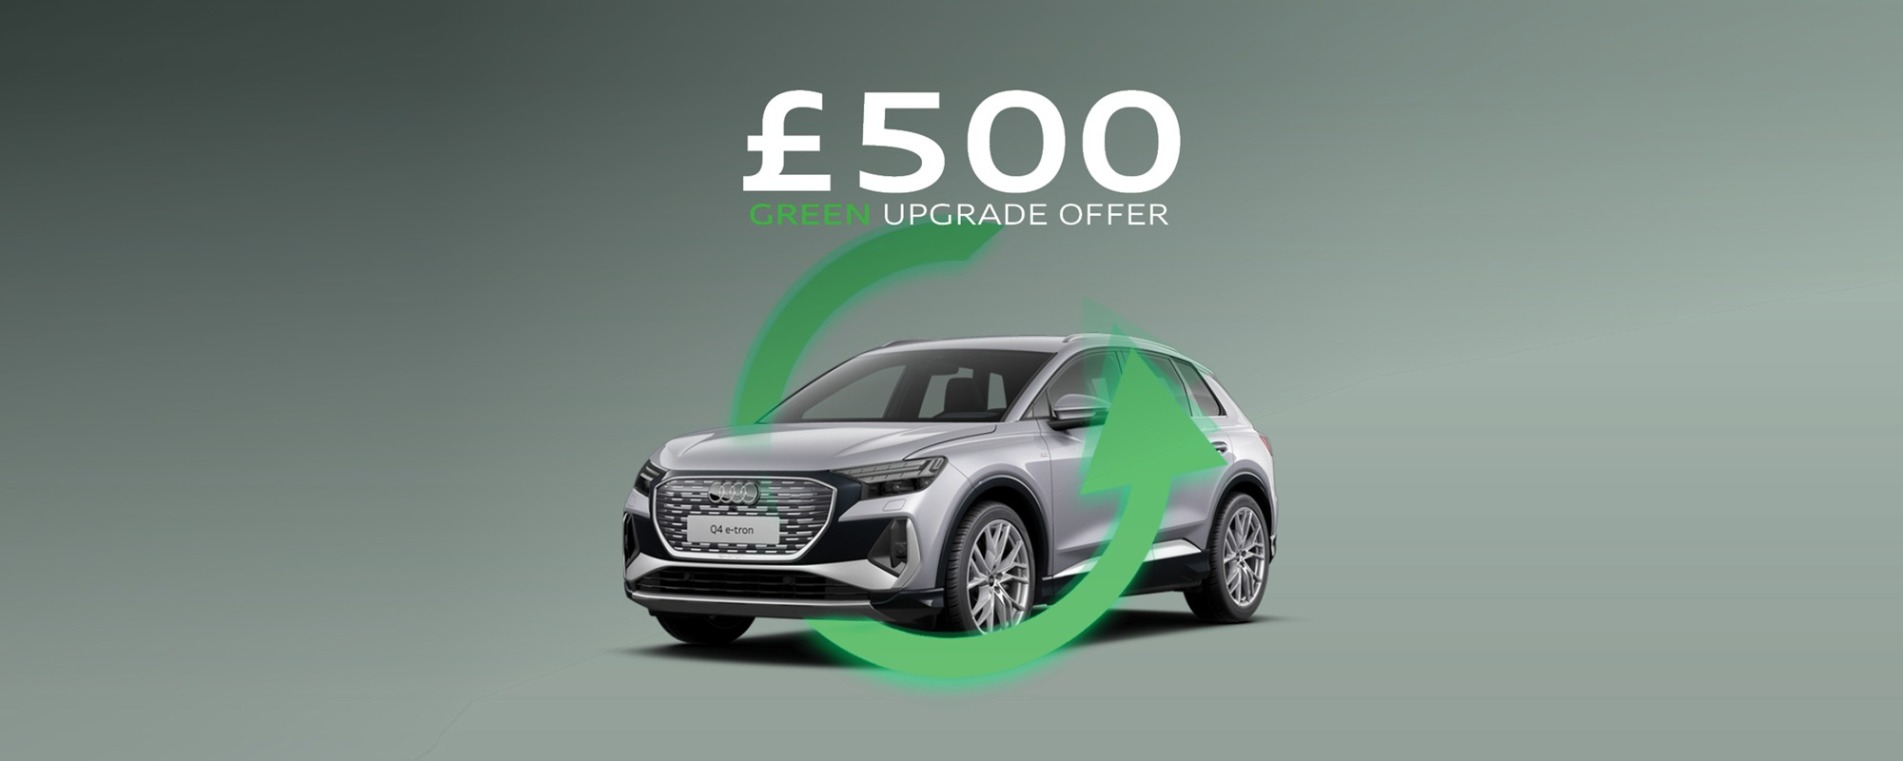 £500 Green Upgrade Offer